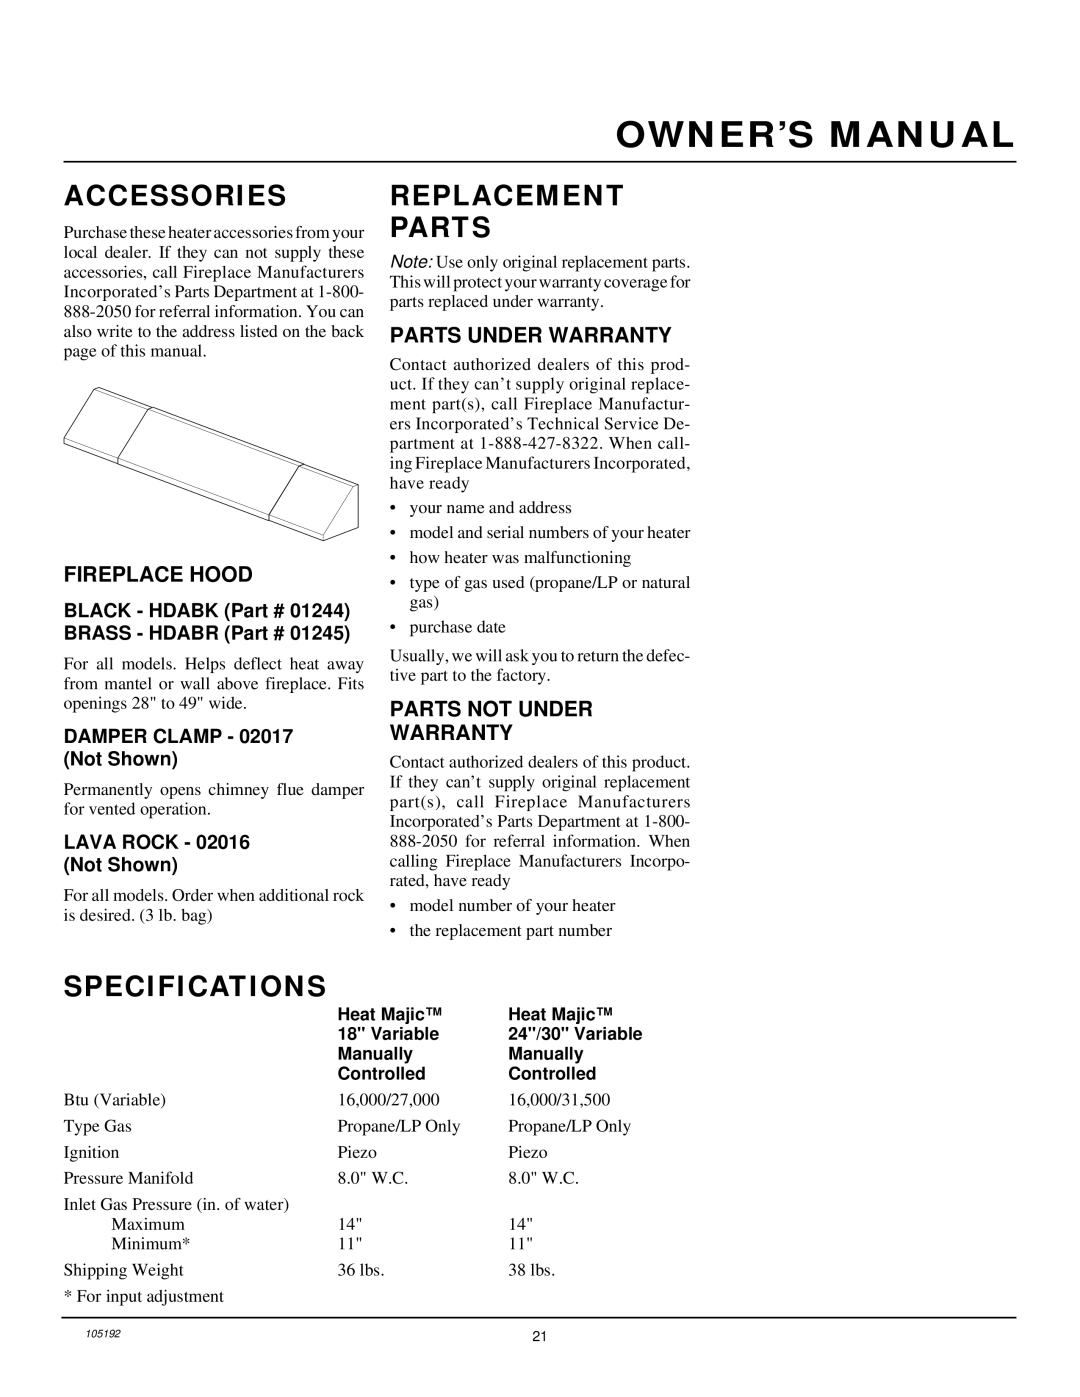 Desa FVF30P, FVF24P, FVF18P installation manual Accessories, Replacement Parts, Specifications 